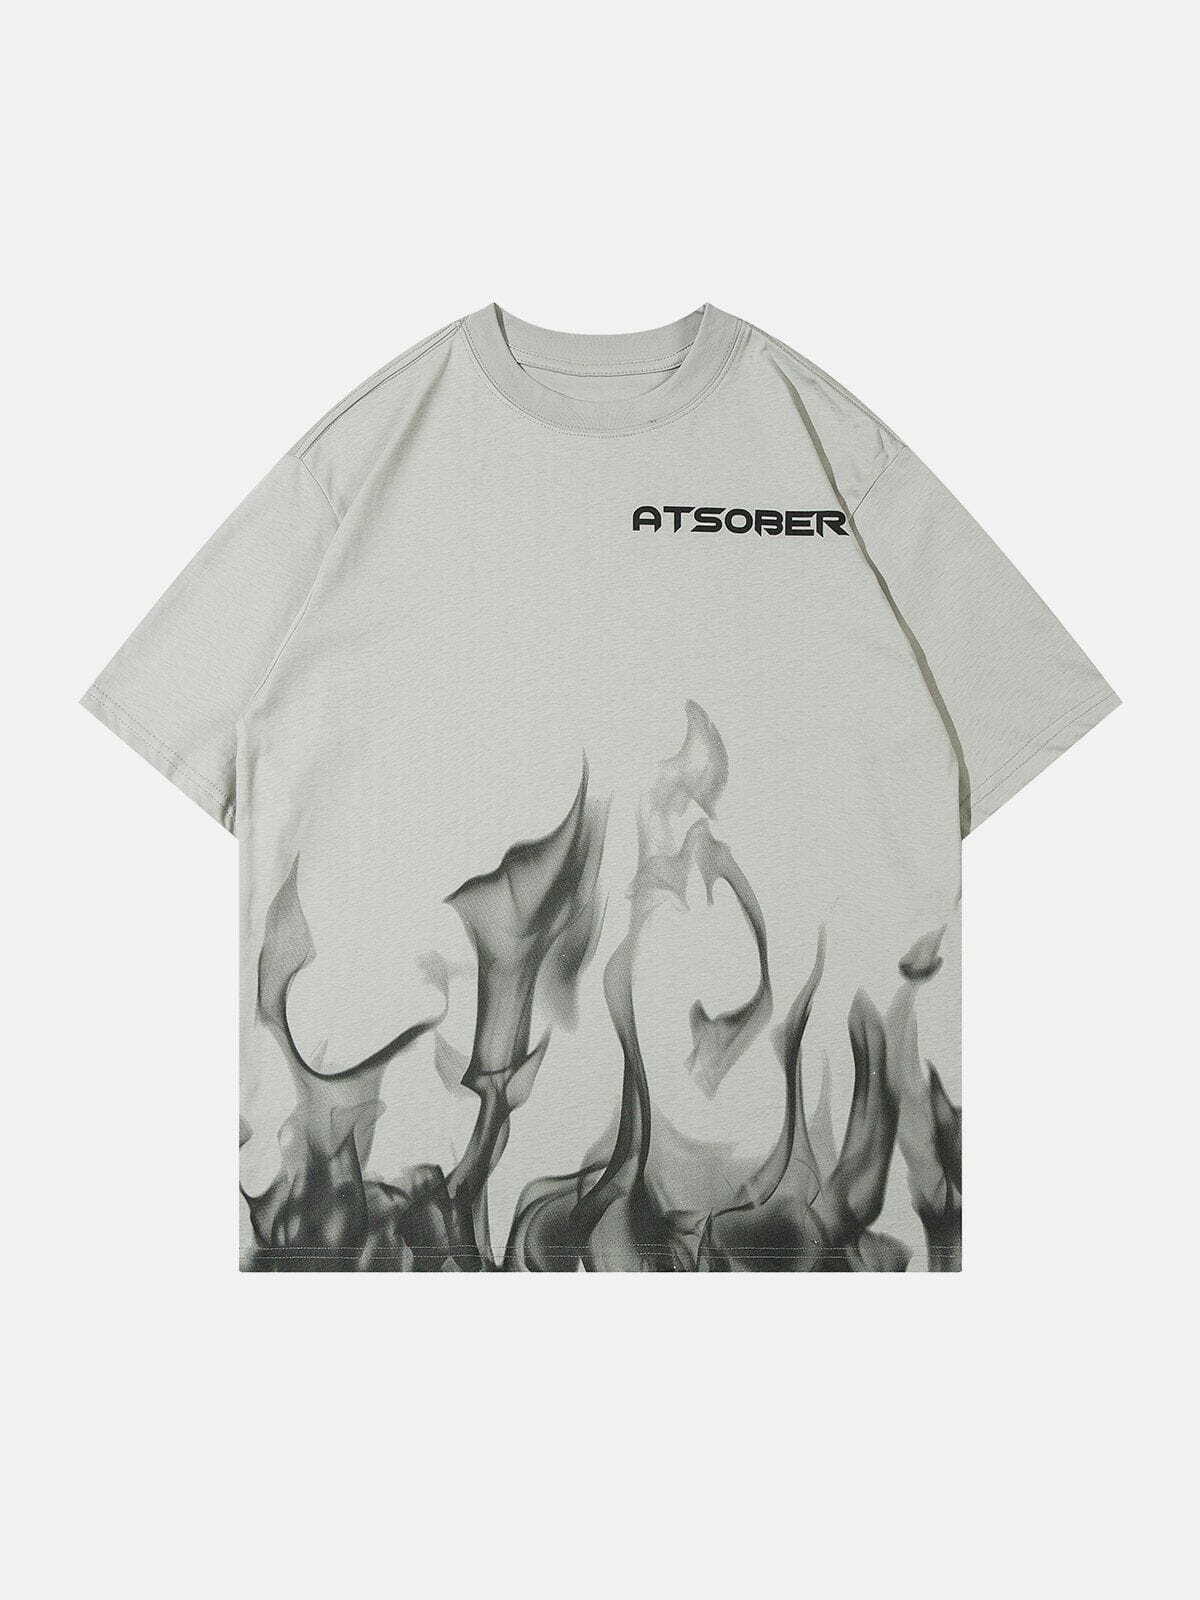 flame print cotton tee vibrant retro streetwear 1363